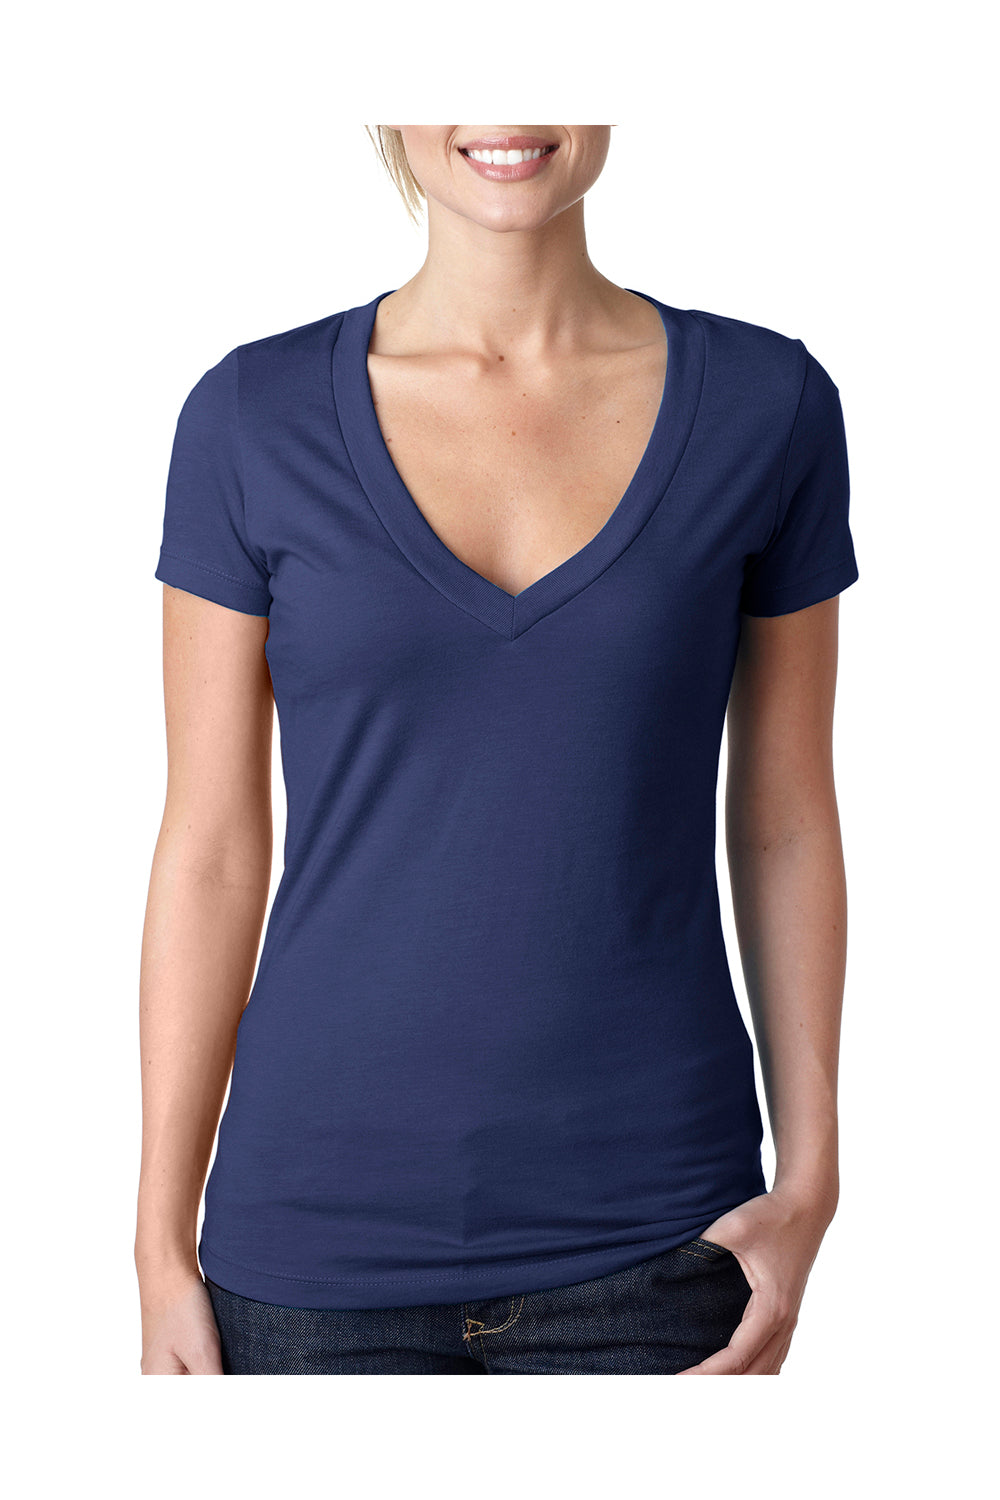 Next Level 6640 Womens CVC Jersey Short Sleeve V-Neck T-Shirt Storm Blue Front